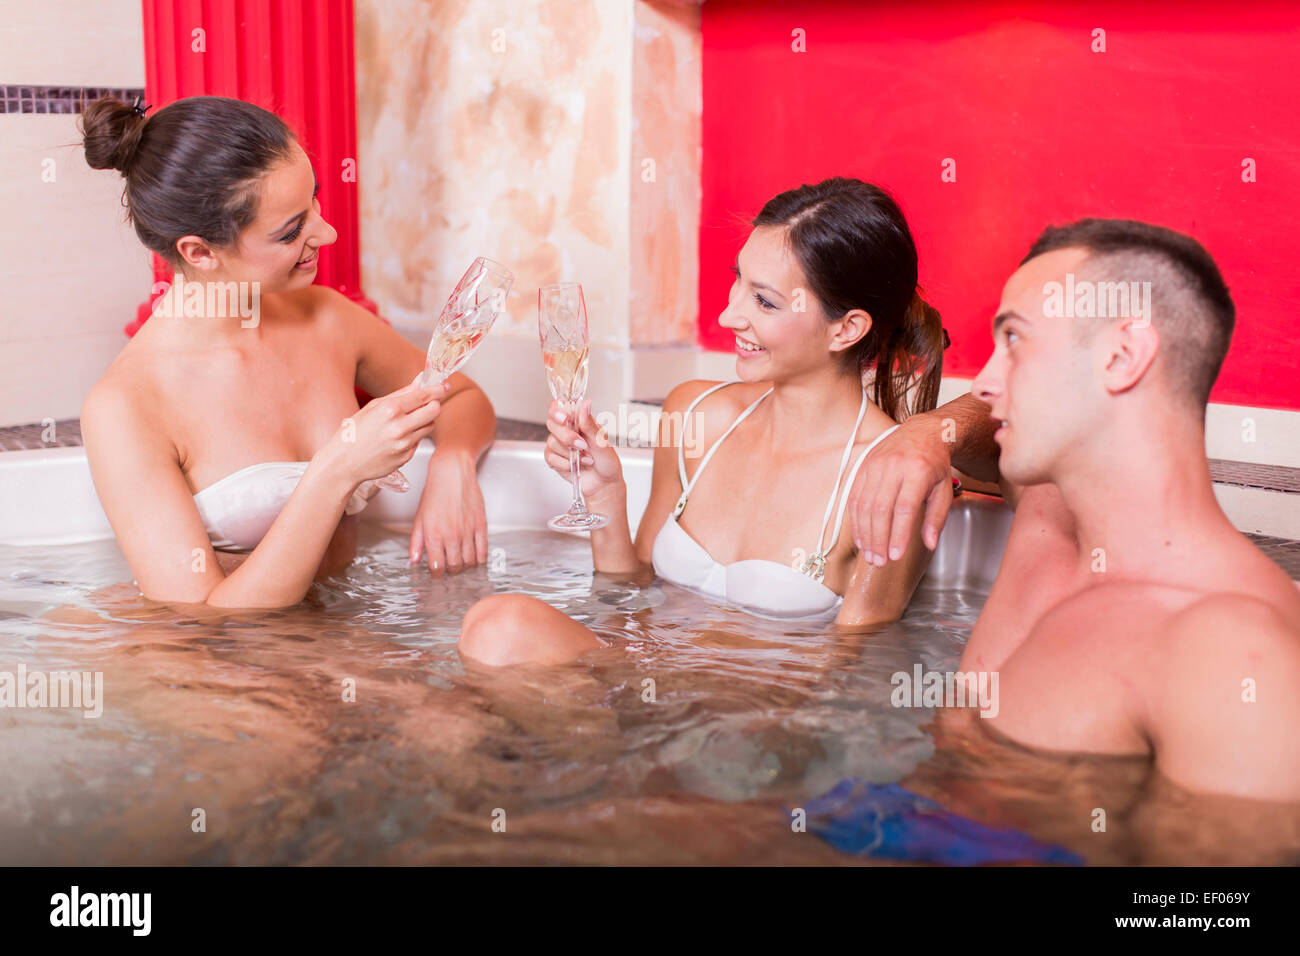 Hot tub threesome pic image